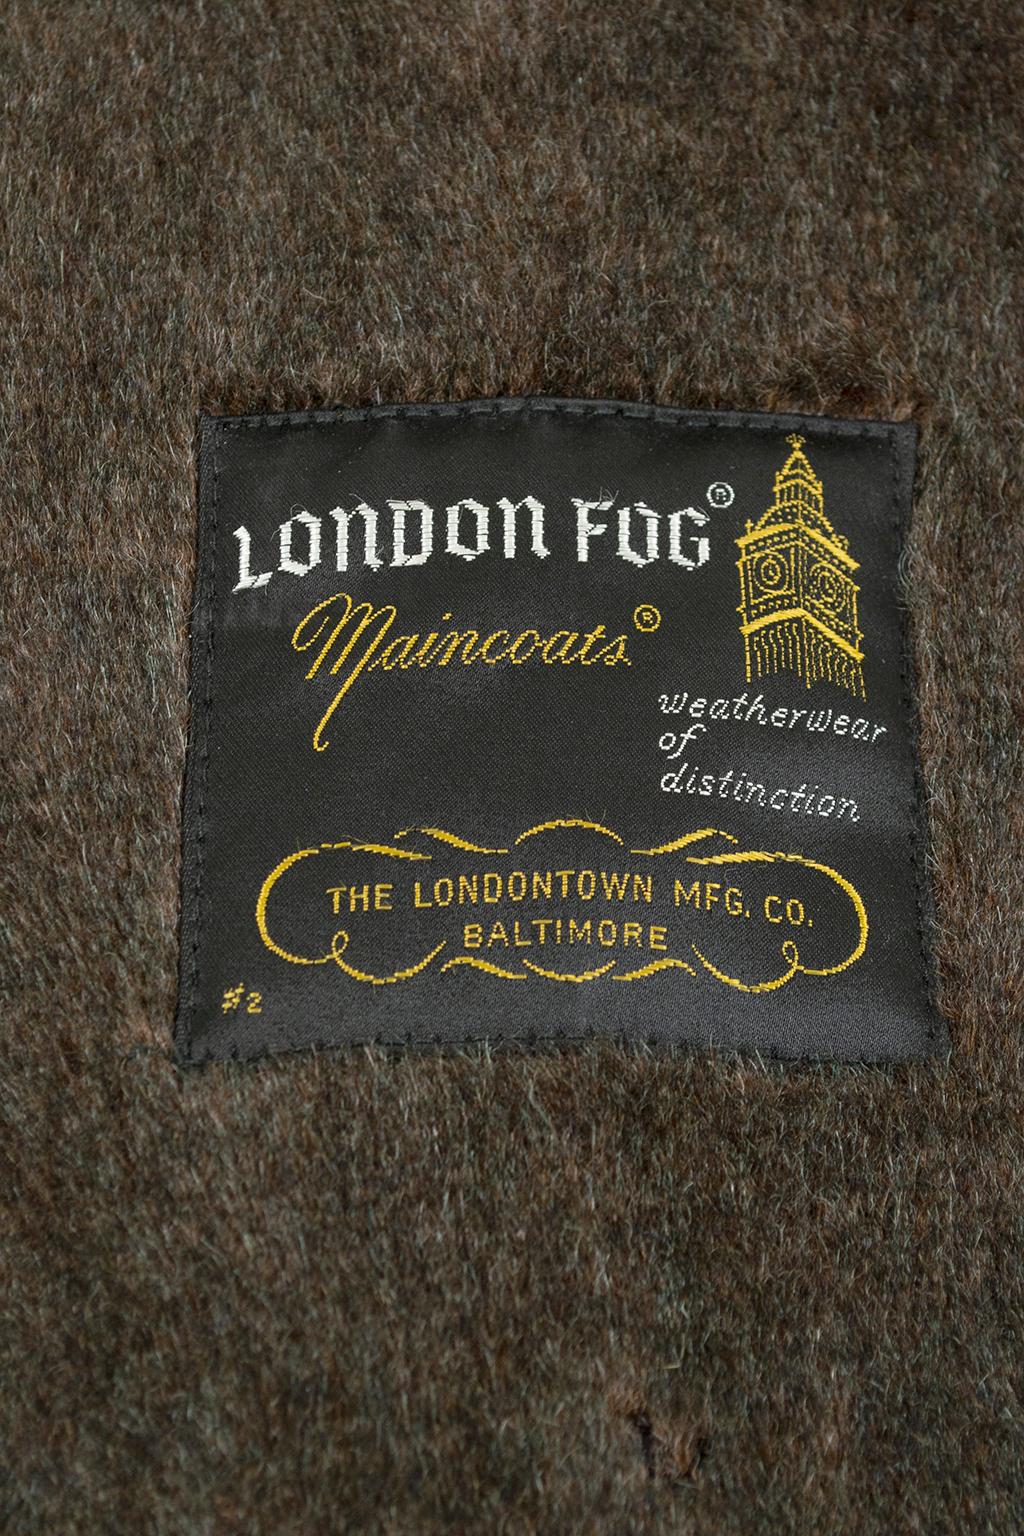 Men’s London Fog Khaki Trench Raincoat with Removable Alpaca Lining–40/ ...